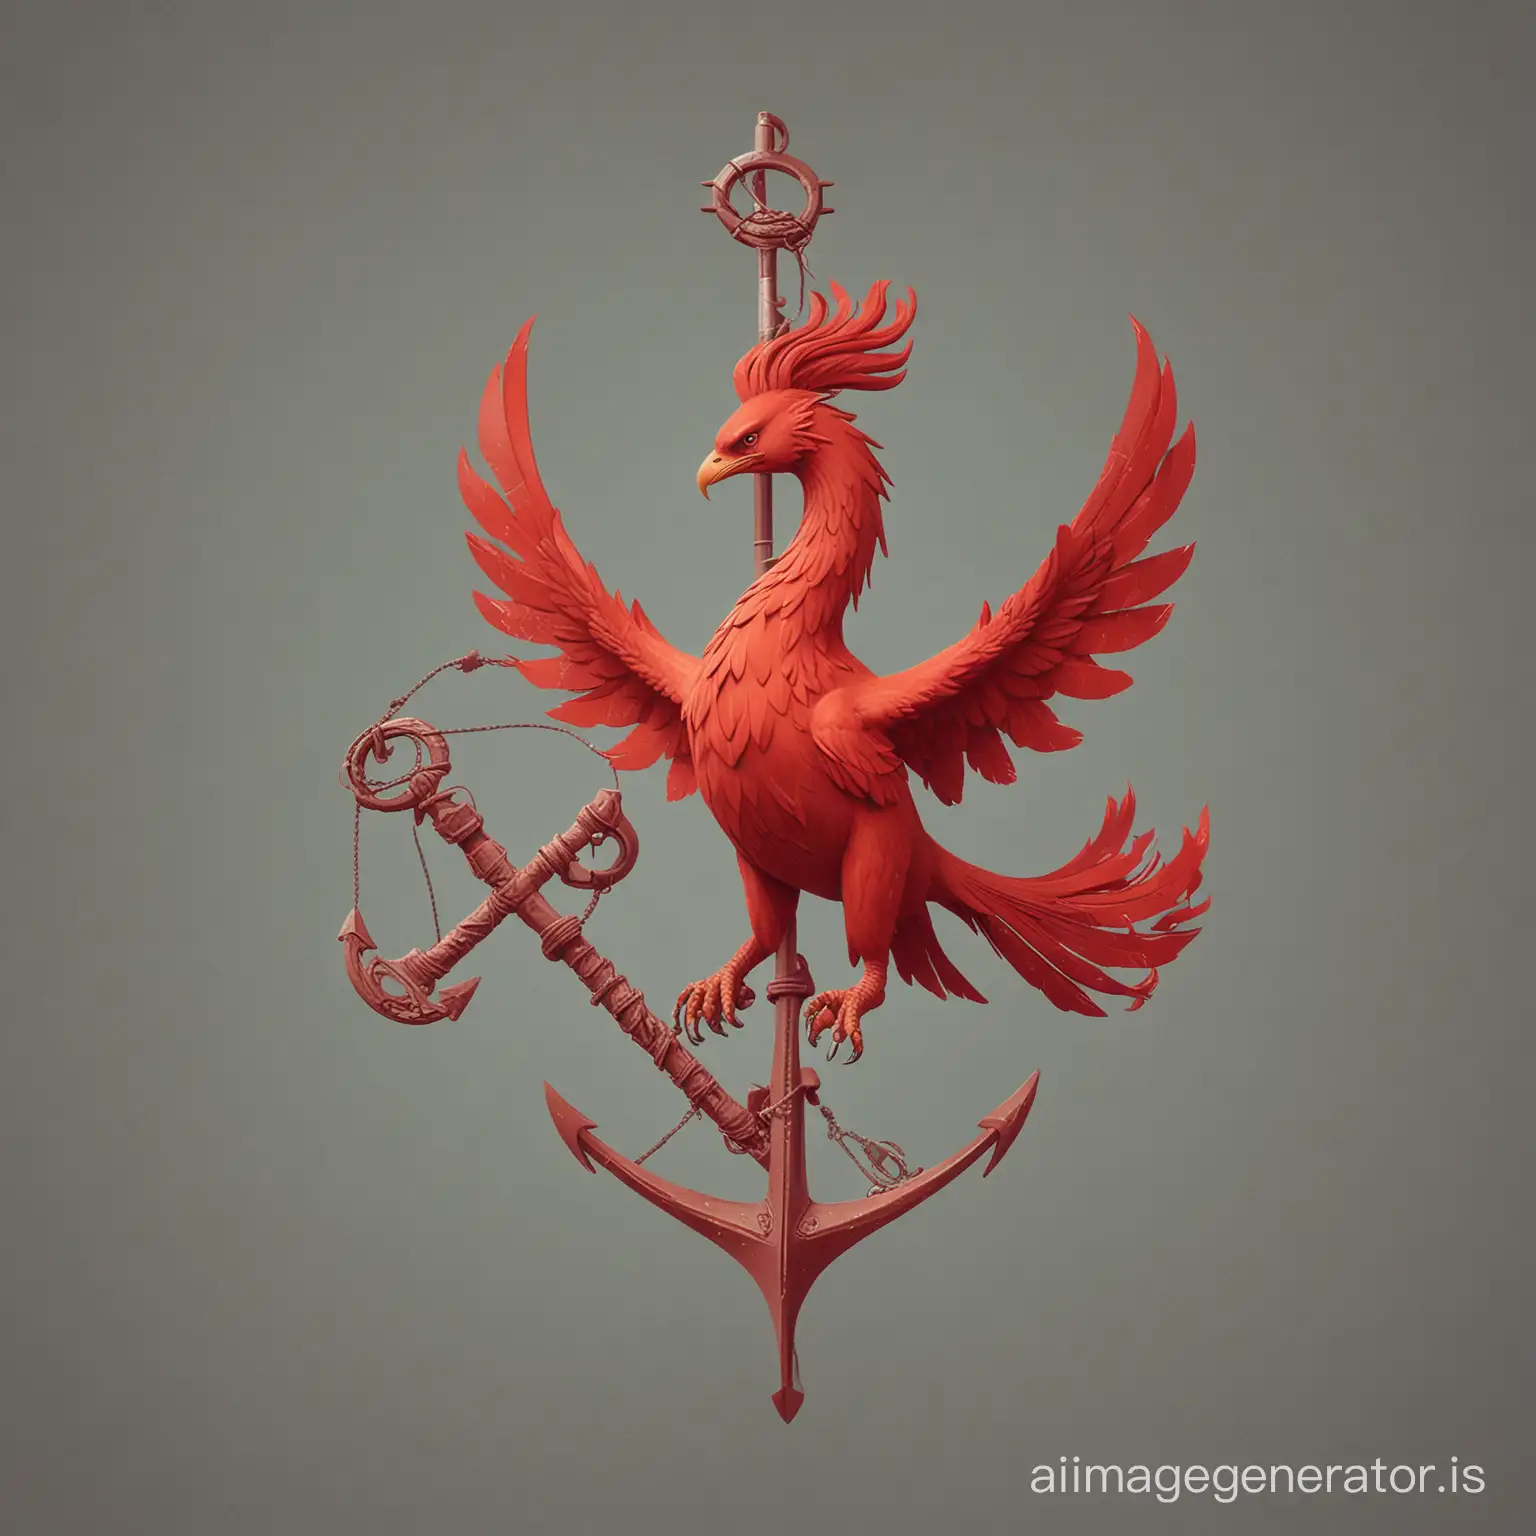 Minimalistic-Red-Phoenix-Holding-Anchor-Symbolic-Bird-with-Maritime-Element